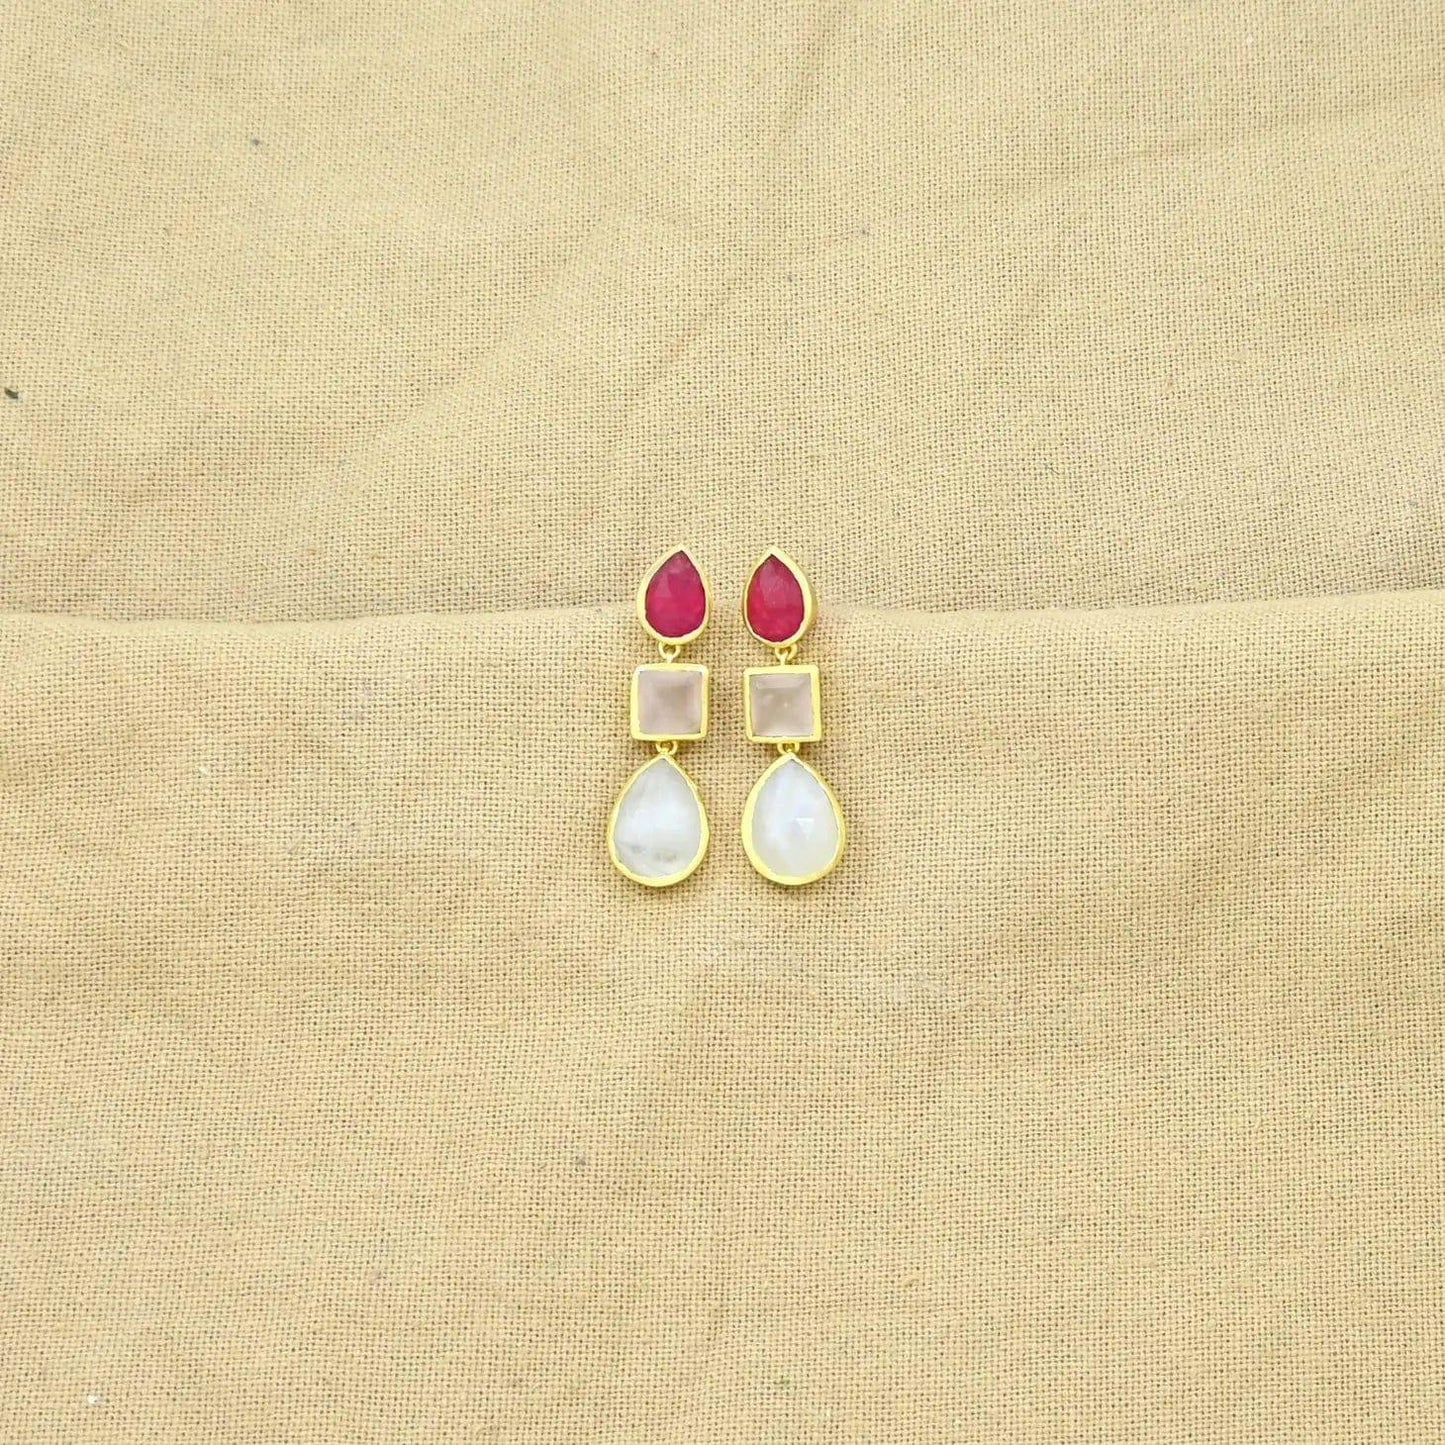 Schmuckoo Berlin Earrings Ophelia Earrings Gold in Rose Quartz, Pink Jade & Moonstone